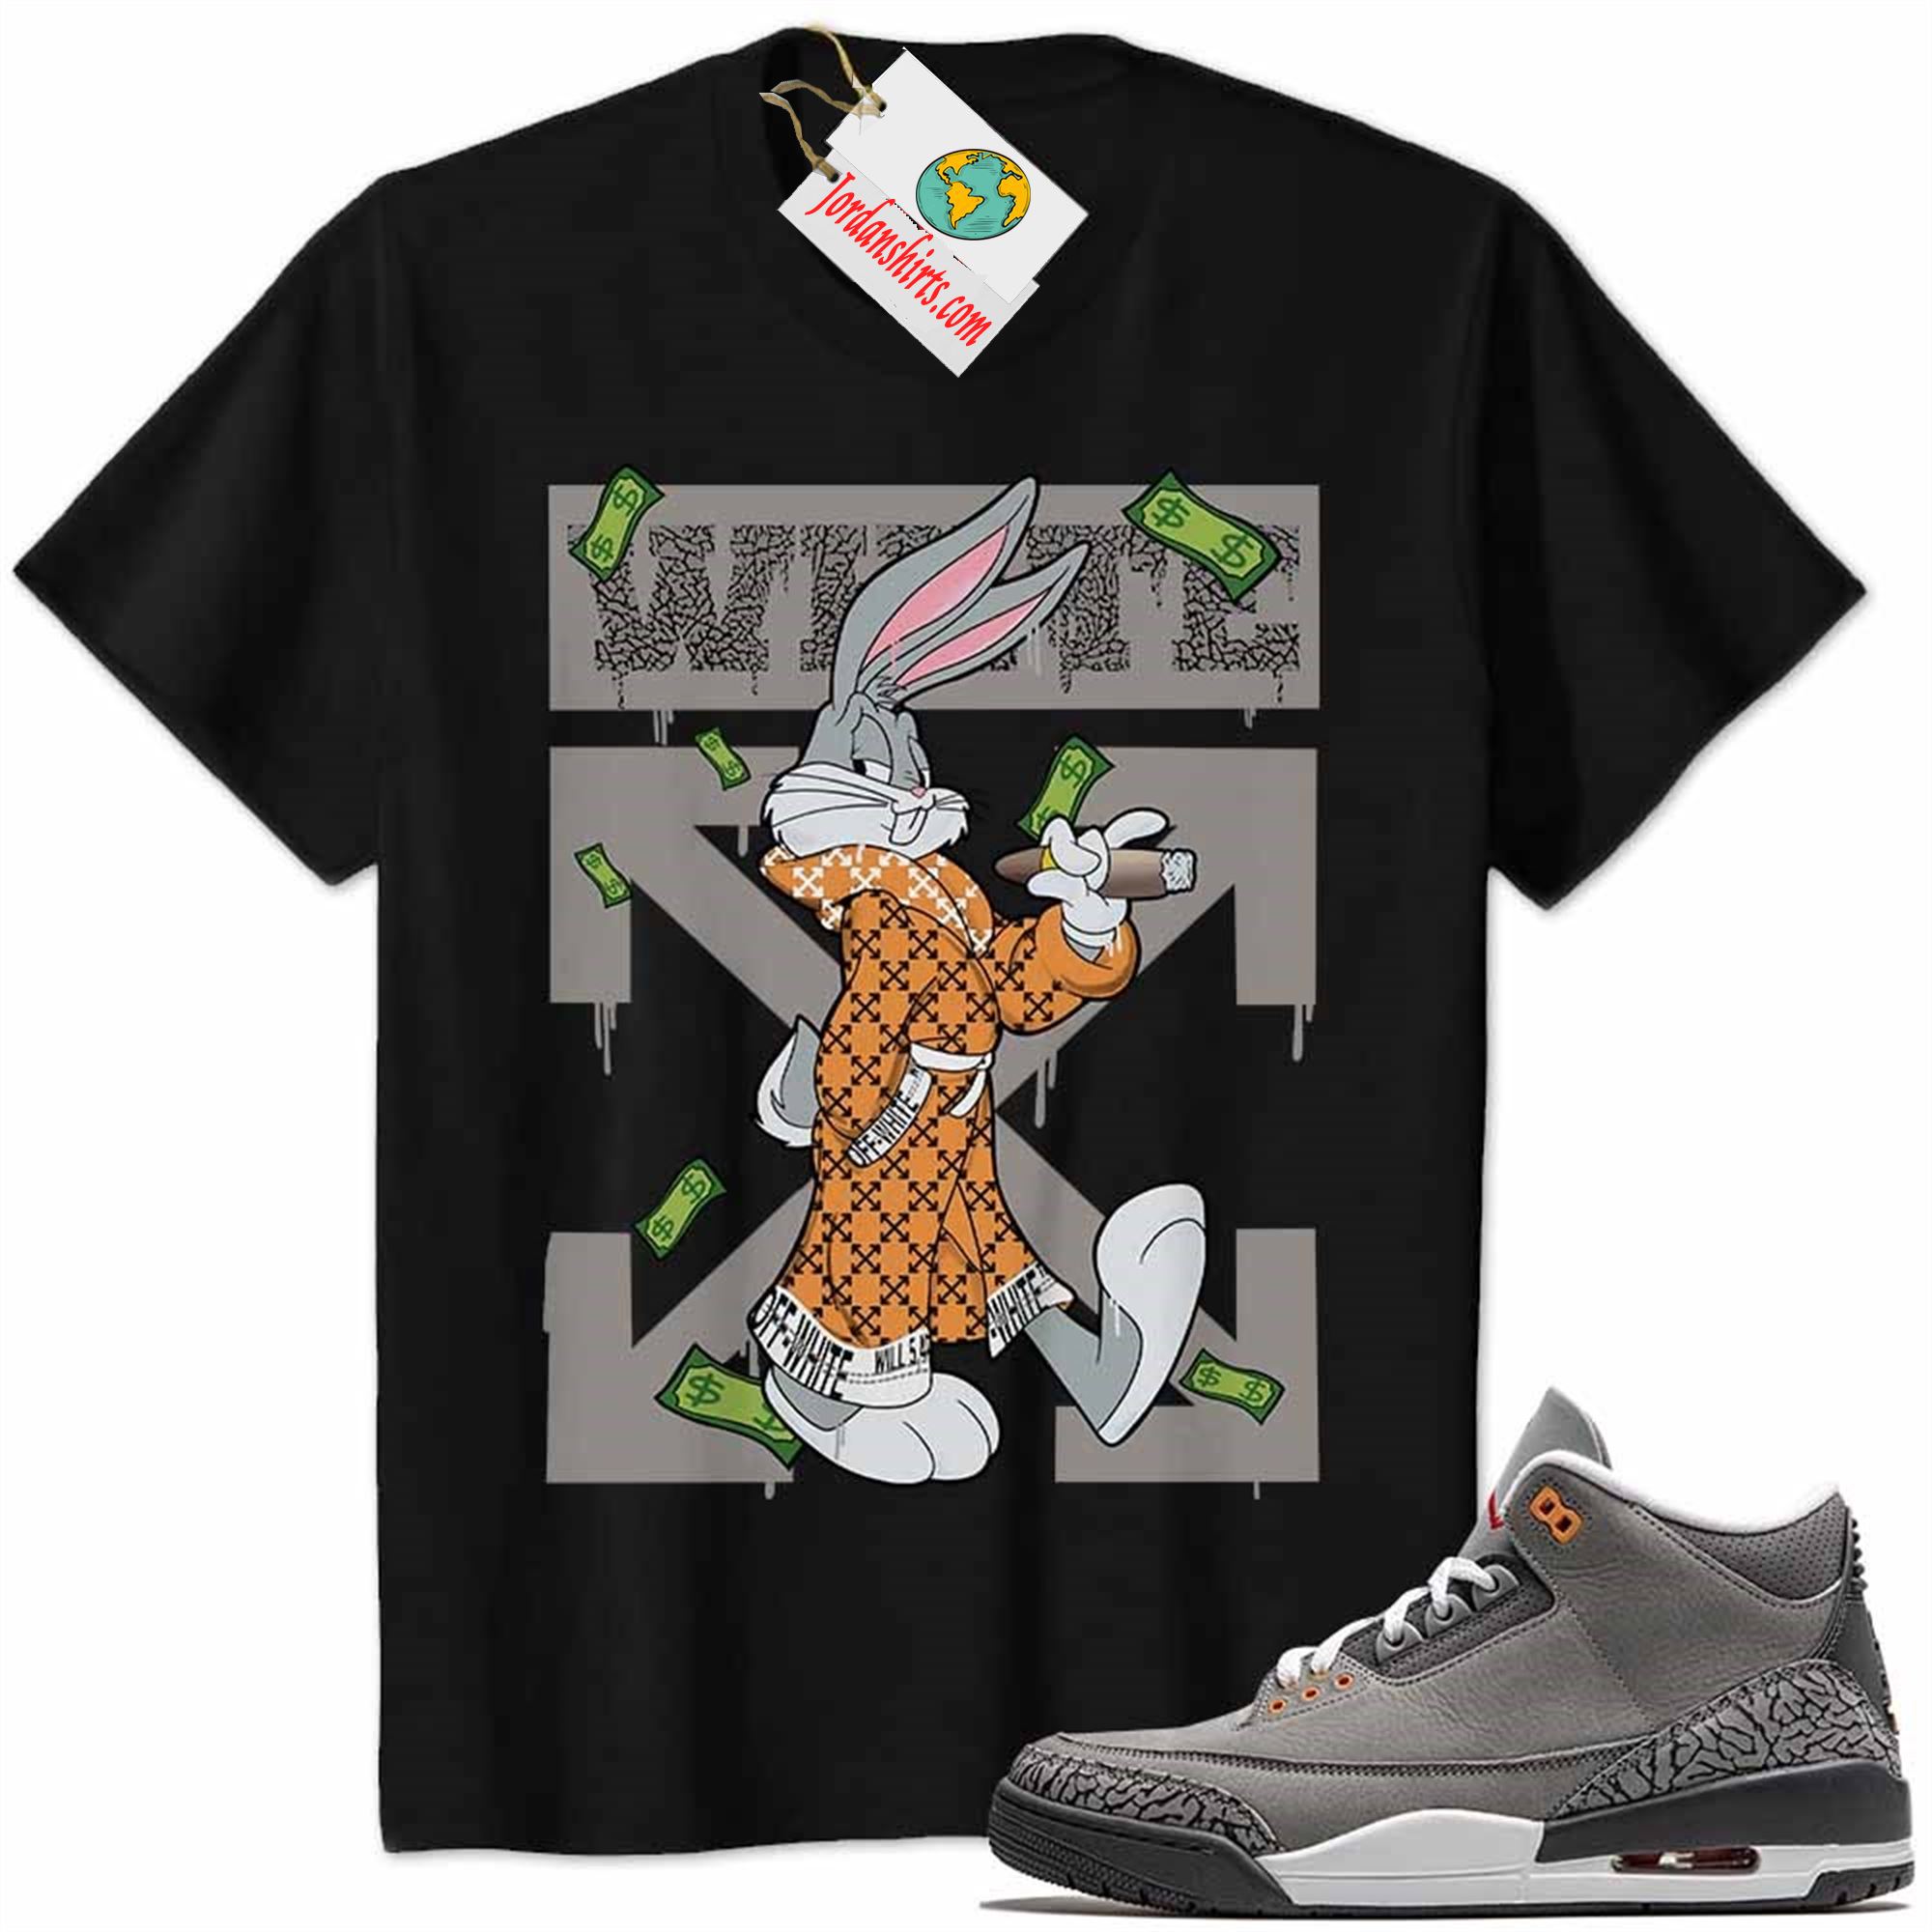 Jordan 3 Shirt, Jordan 3 Cool Grey Shirt Bug Bunny Smokes Weed Money Falling Black Full Size Up To 5xl